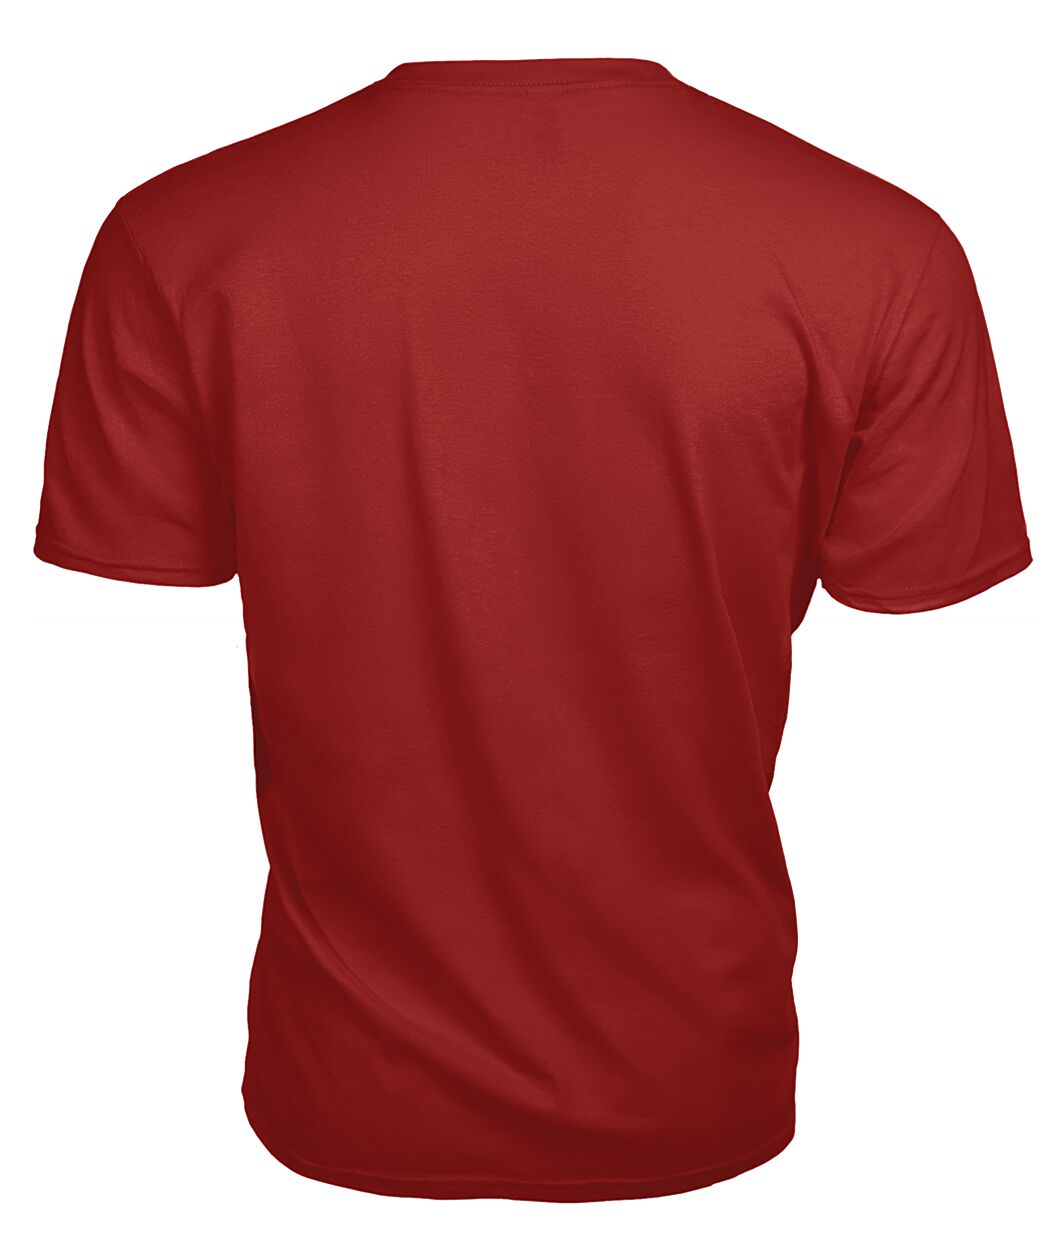 Walkinshaw Family Tartan - 2D T-shirt